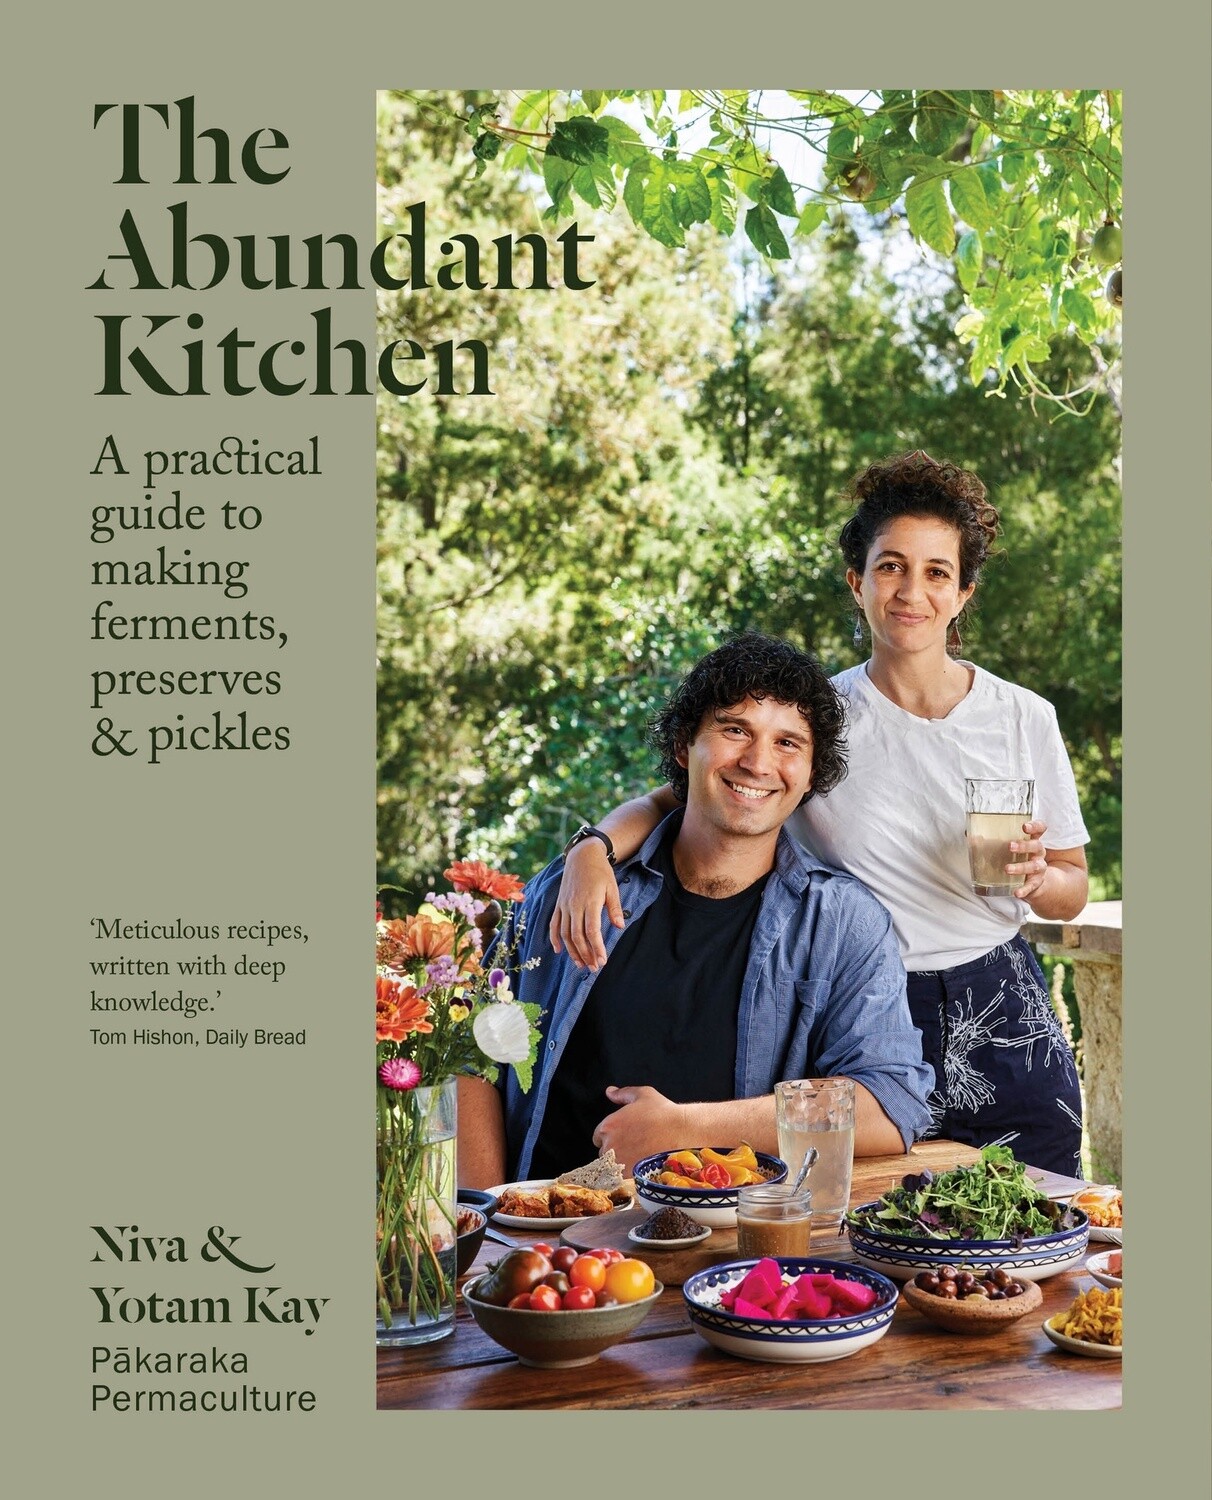 The Abundant Kitchen by Niva and Yotam Kay